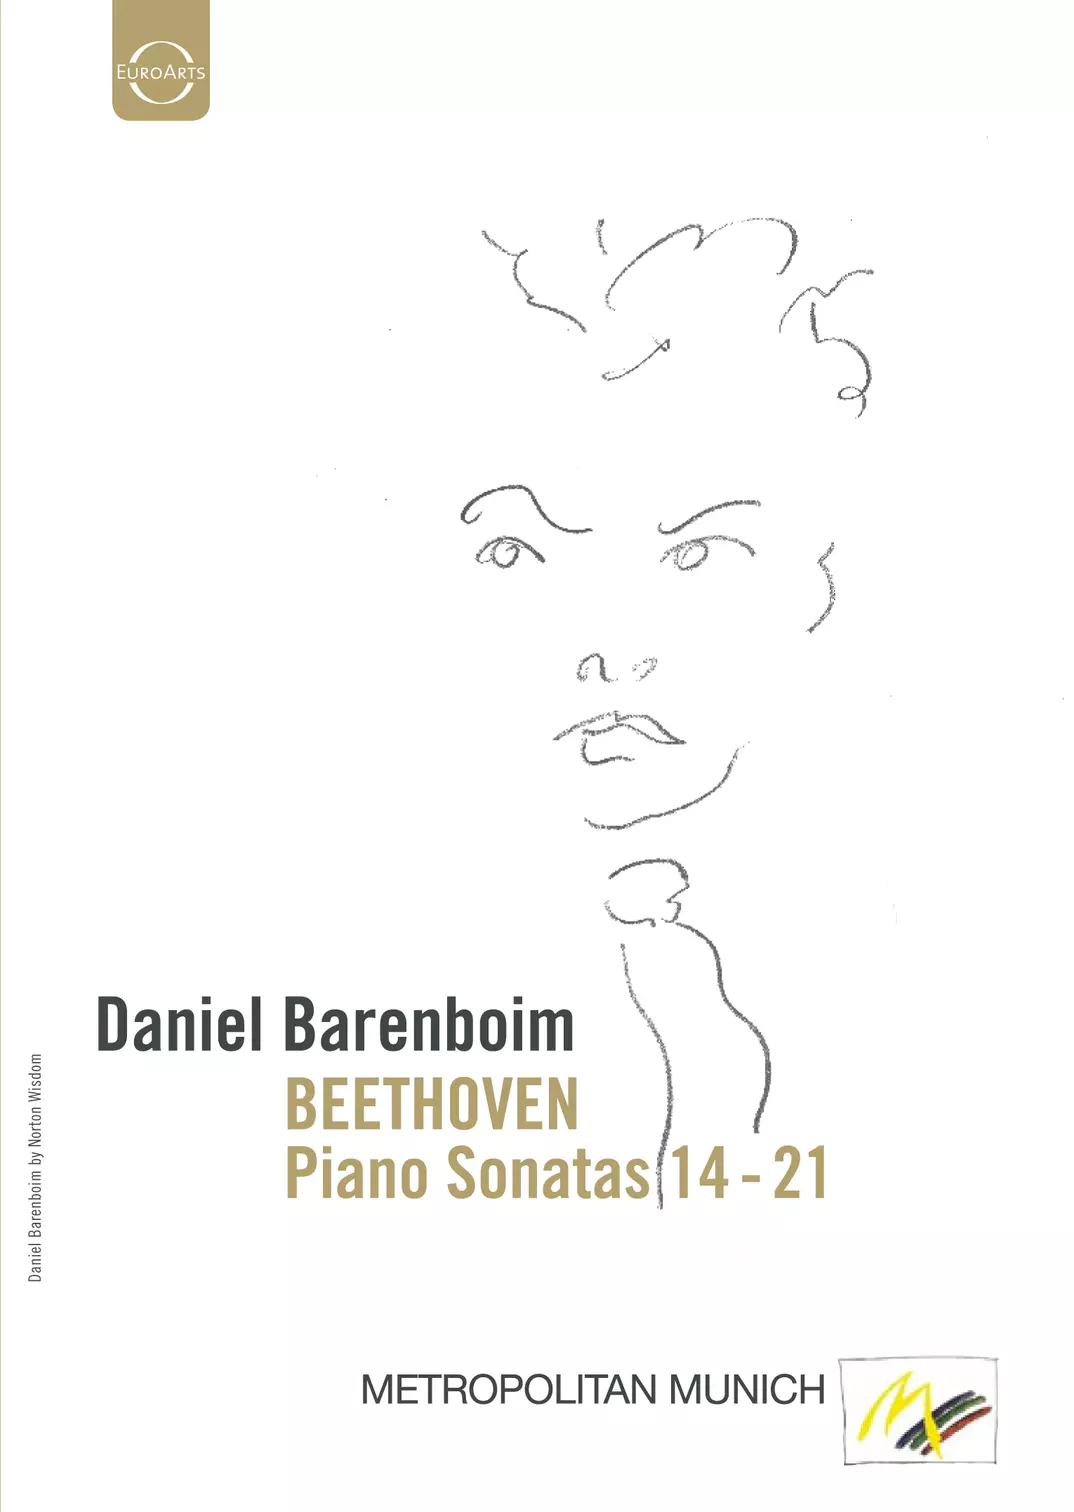 Barenboim plays Beethoven Piano Sonatas Nos. 14-21, Part 3/5